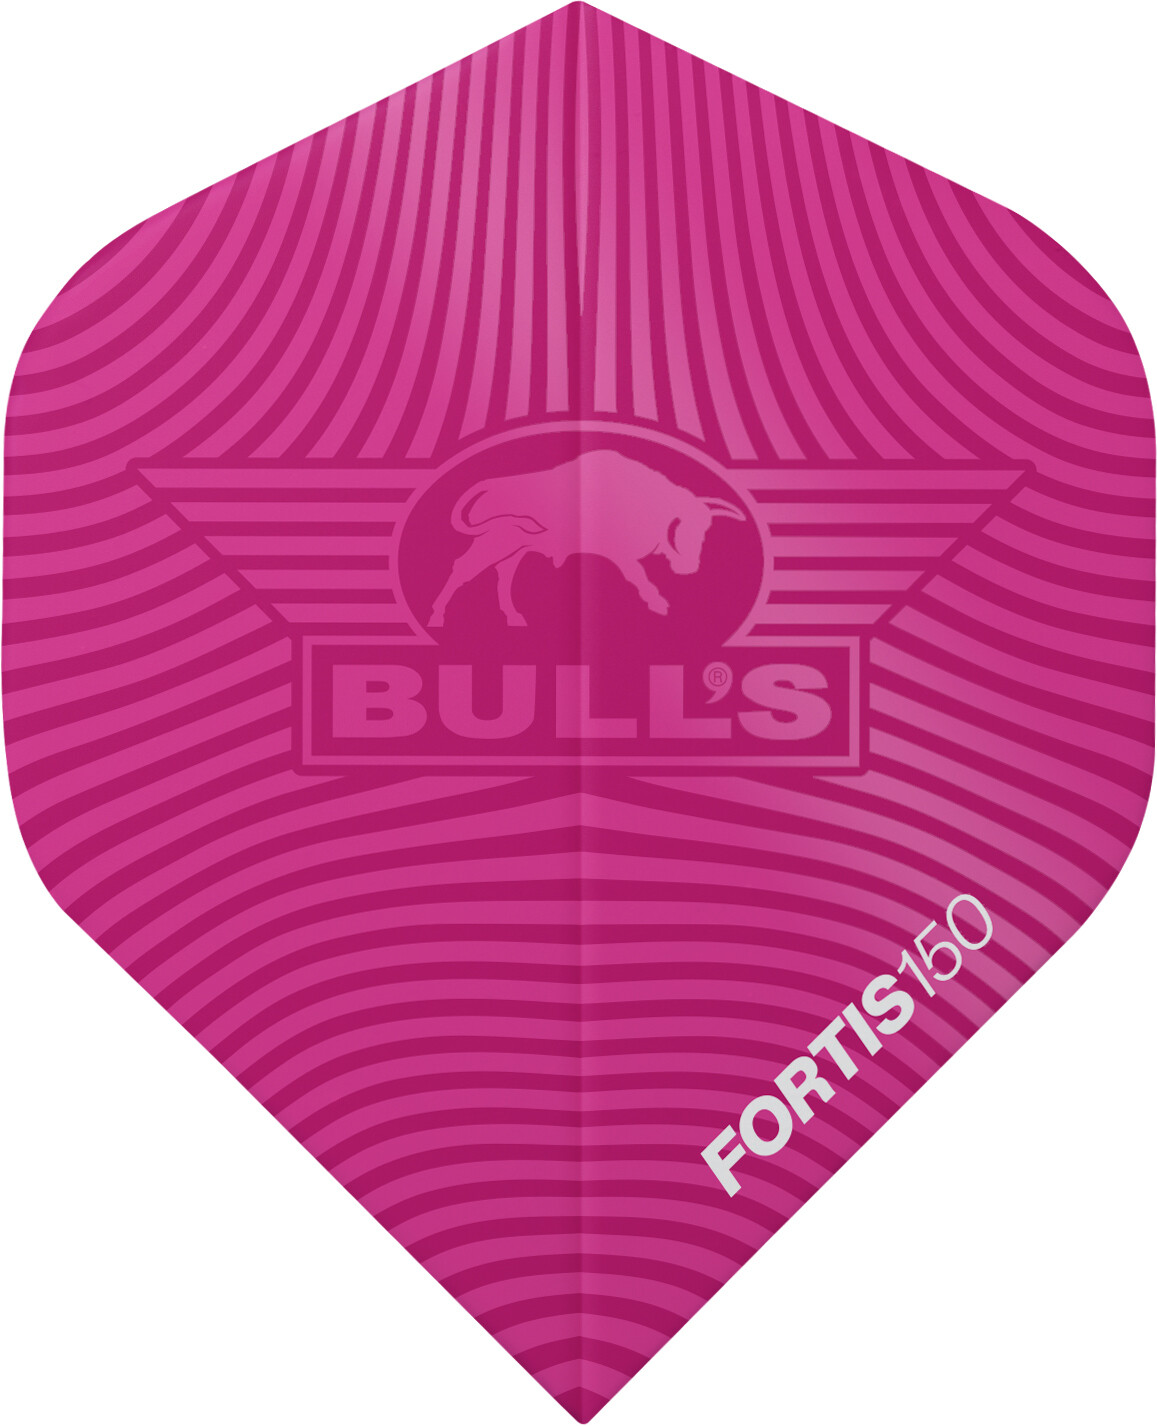 Bull's Fortis 150 Std. Pink